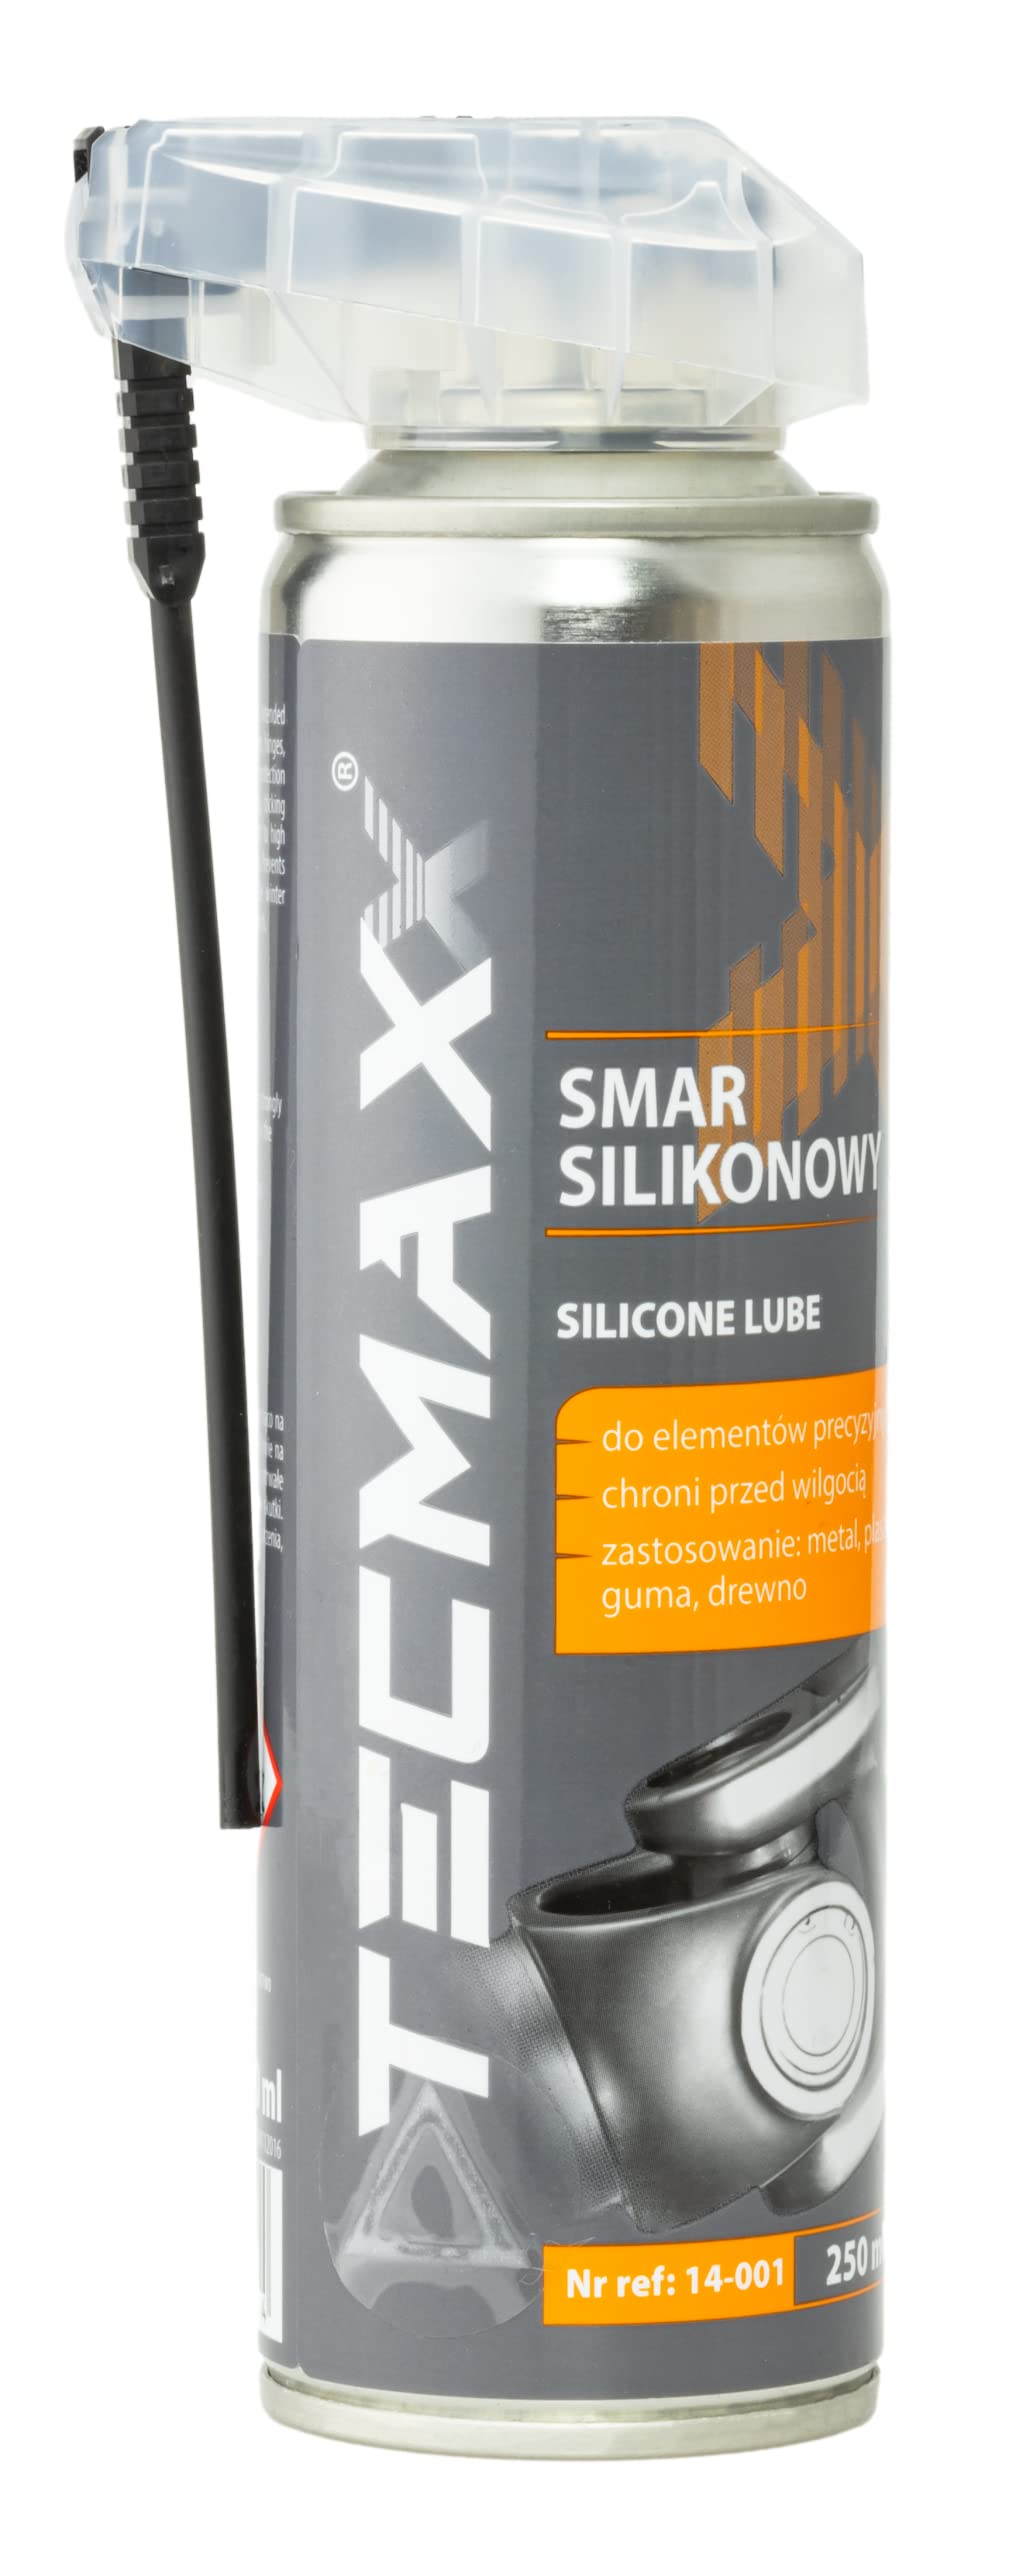 TECMAXX Silikonfett mit Applikator 250 ml - Leichtes Schmierfett - Wasserdicht Schmieröl - Hochtemperatur Silikon für Präzisionsbauteile von TECMAXX